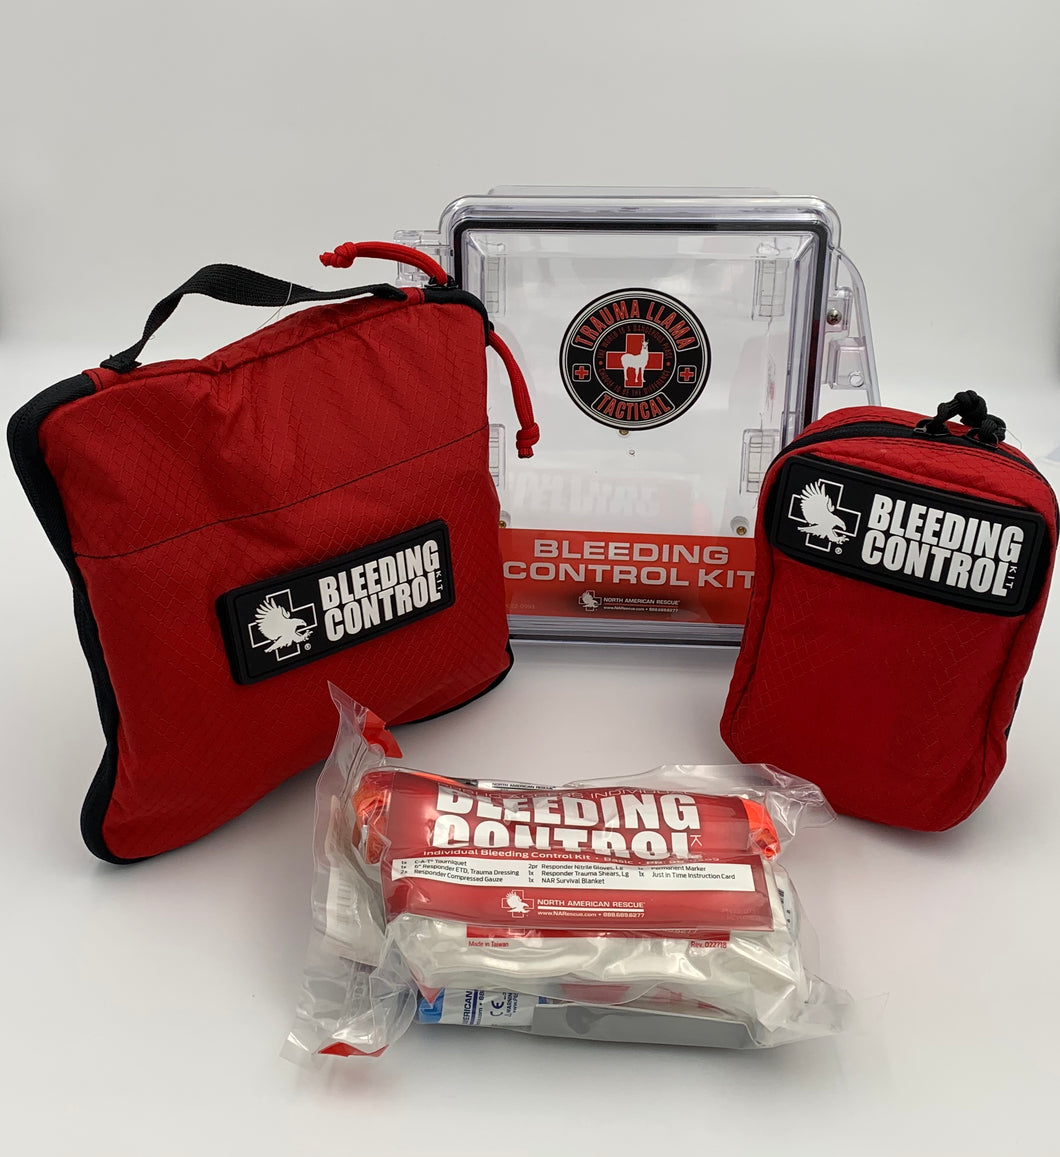 Tornado Emergency Kit - Red Roller Bag — All Emergency Supplies